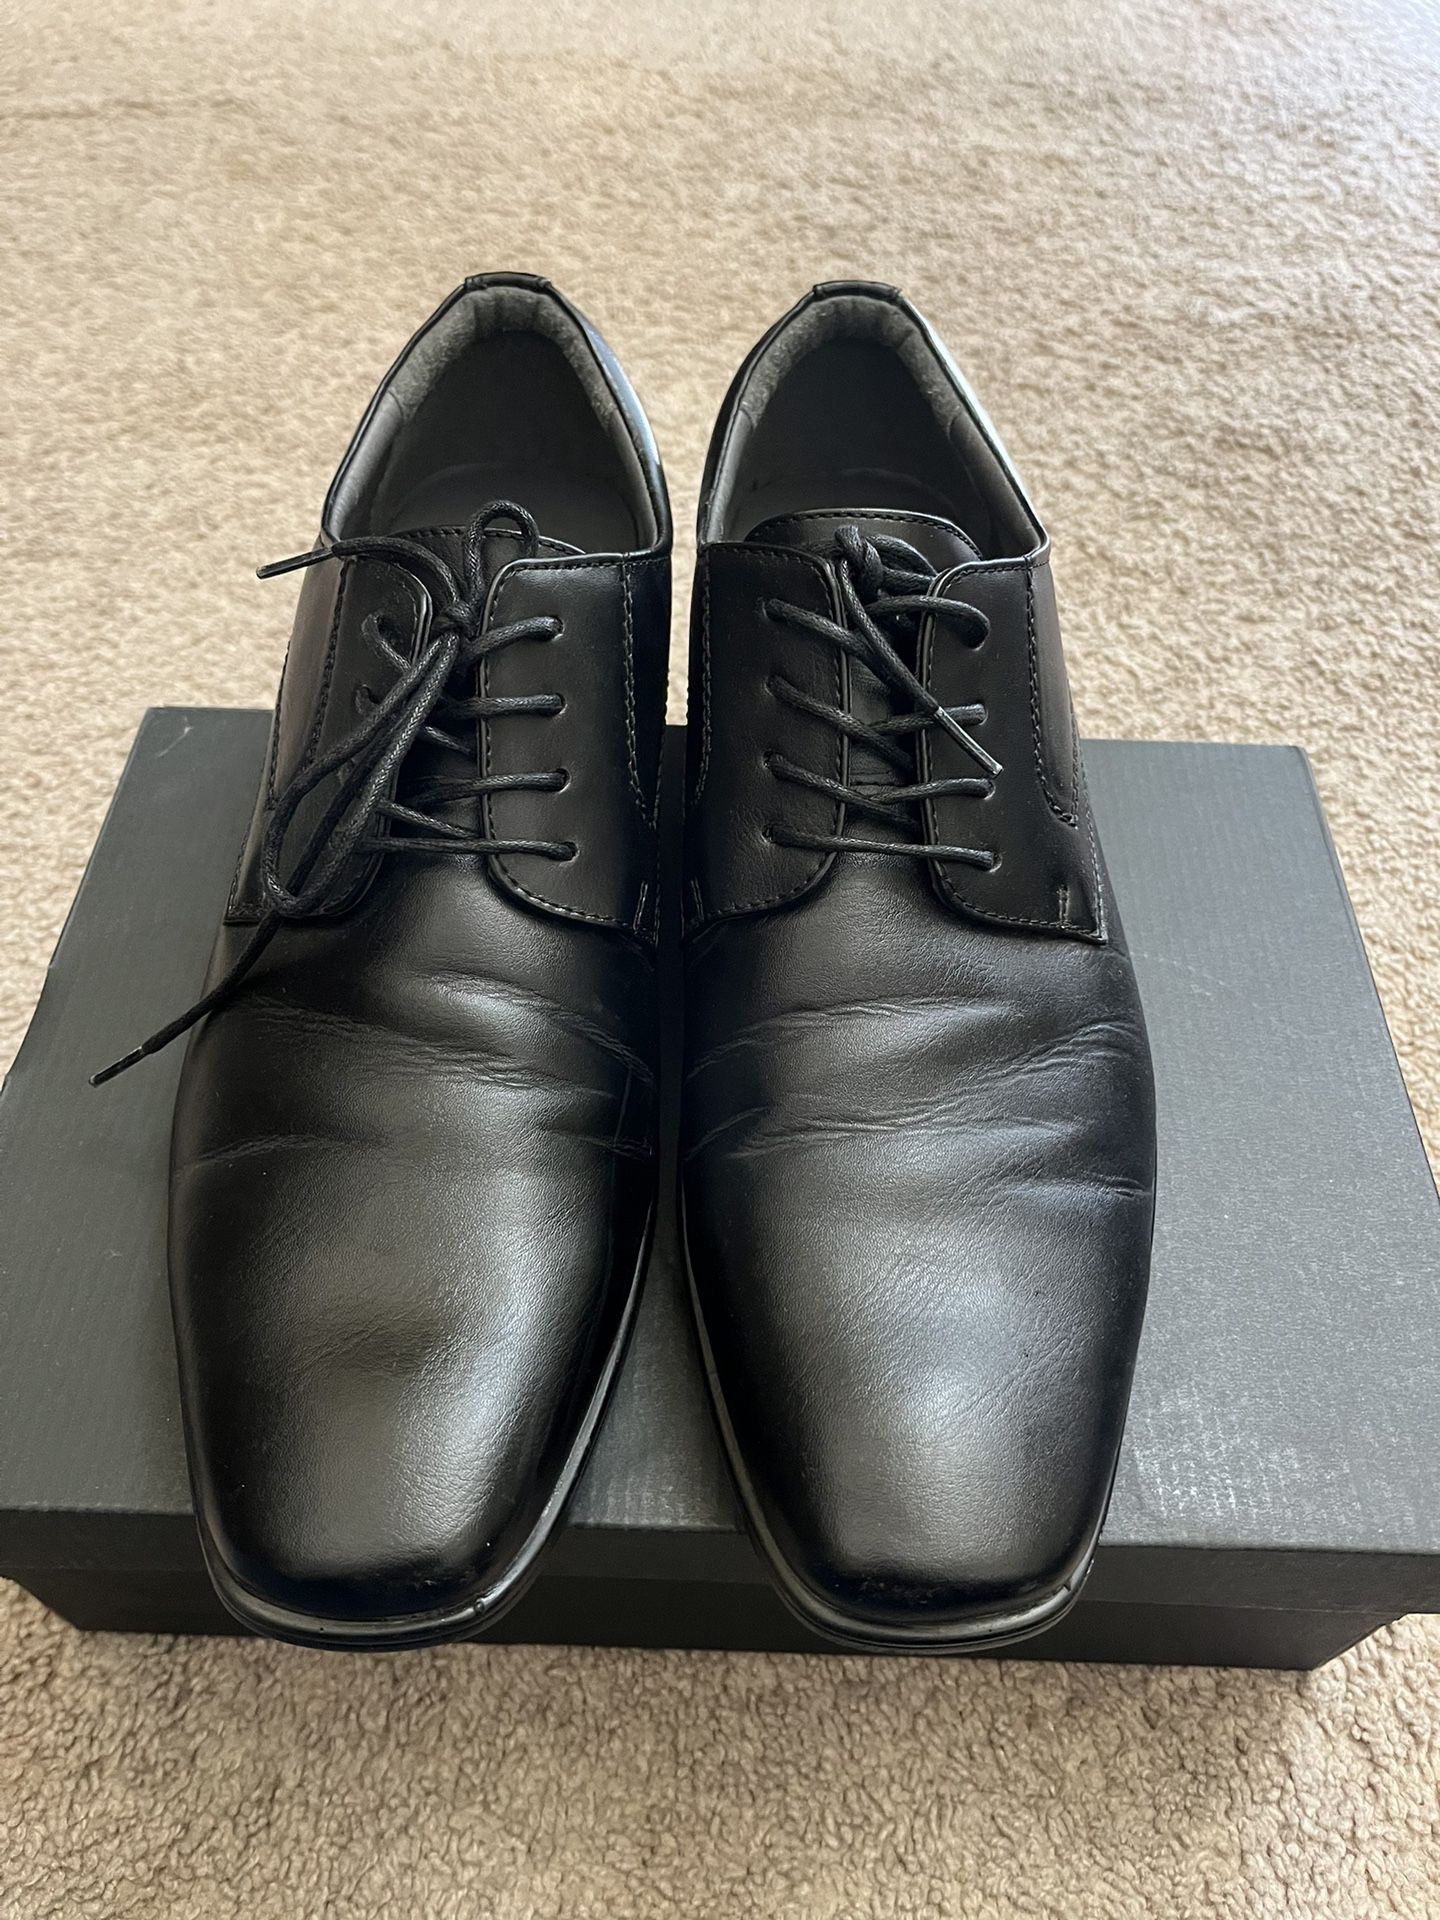 Madden black Dress Shoes  Size 11